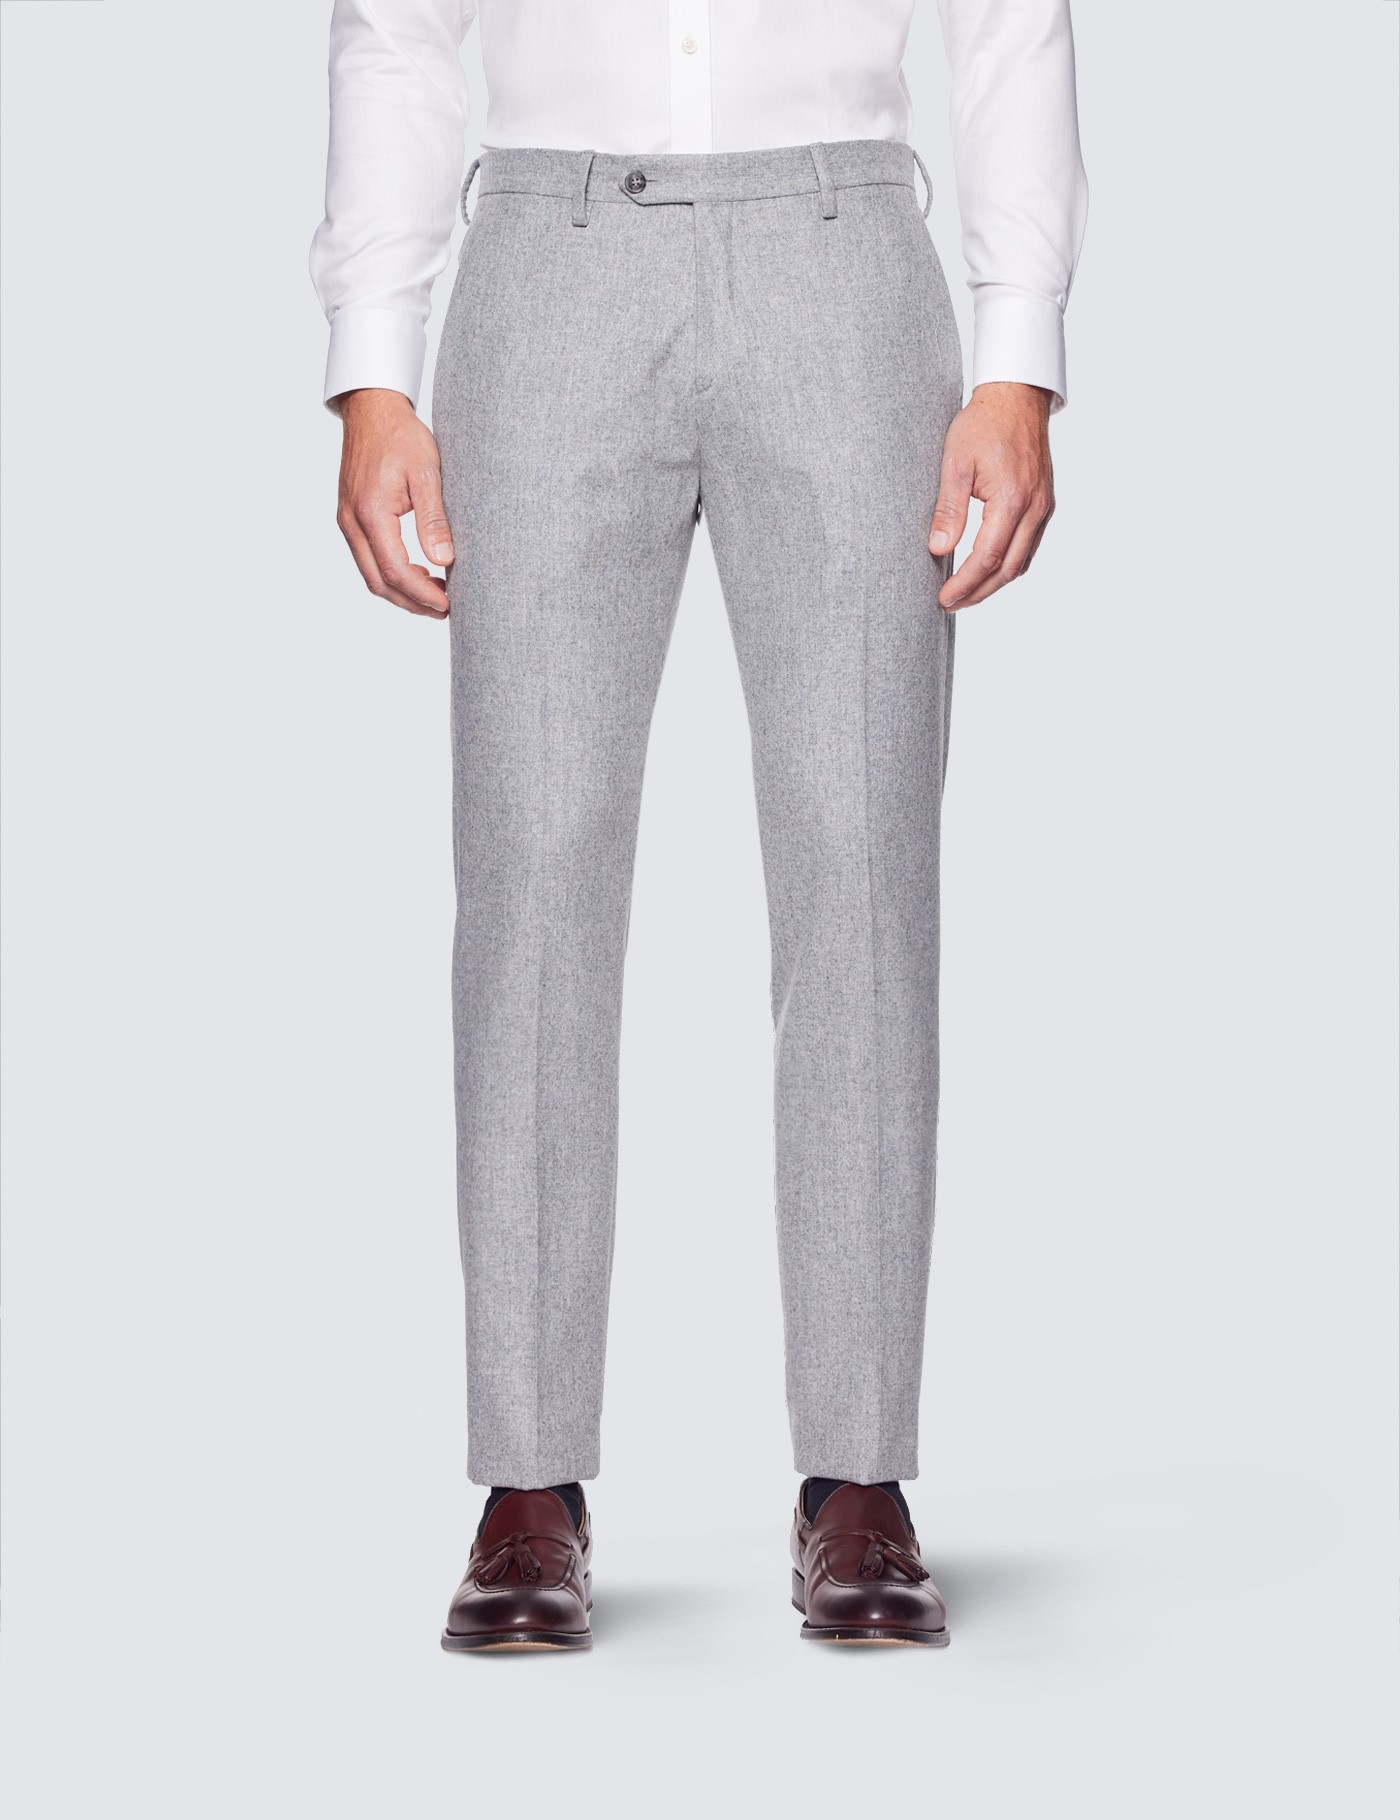 Buy Men Navy Solid Slim Fit Formal Trousers Online  760700  Peter England